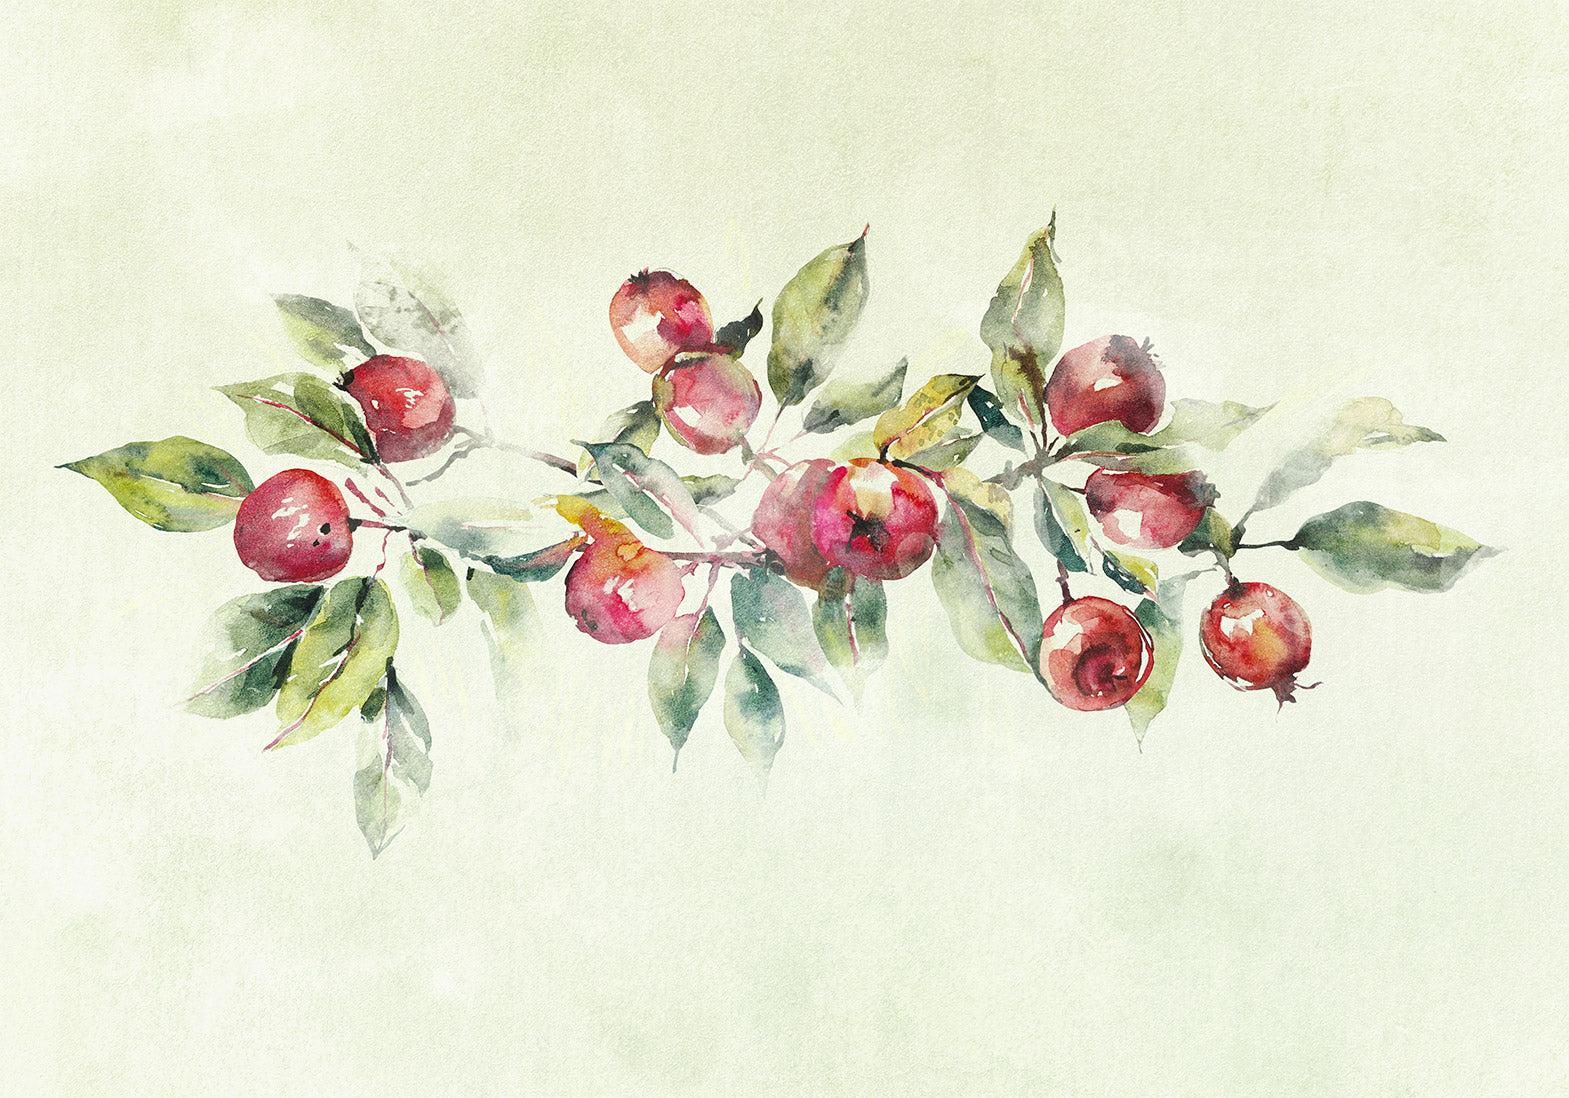 Botanical Wallpaper Wall Mural - Watercolor Apple Branch